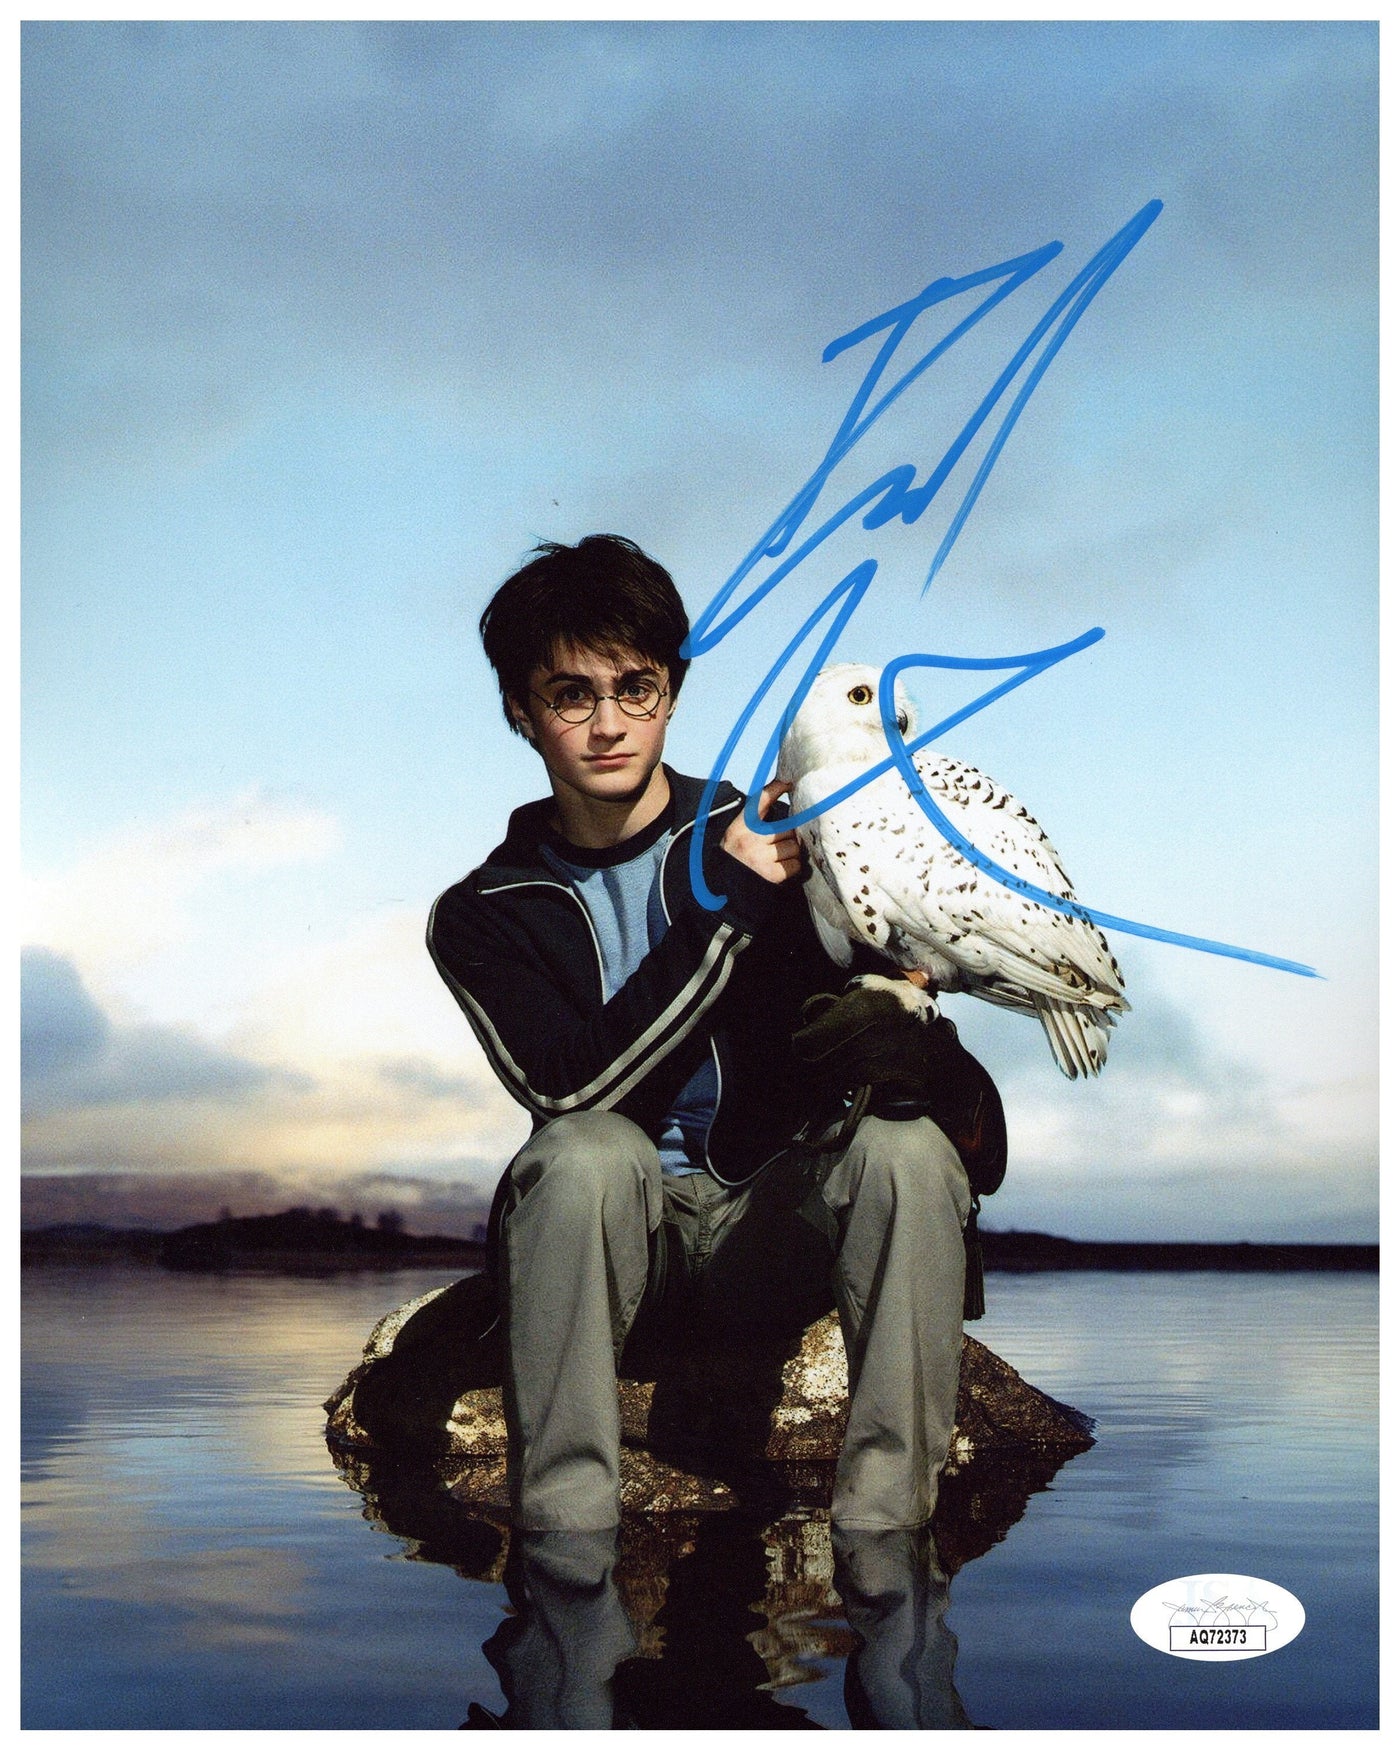 Daniel Radcliffe Signed 8x10 Photo Harry Potter Autographed JSA COA #2